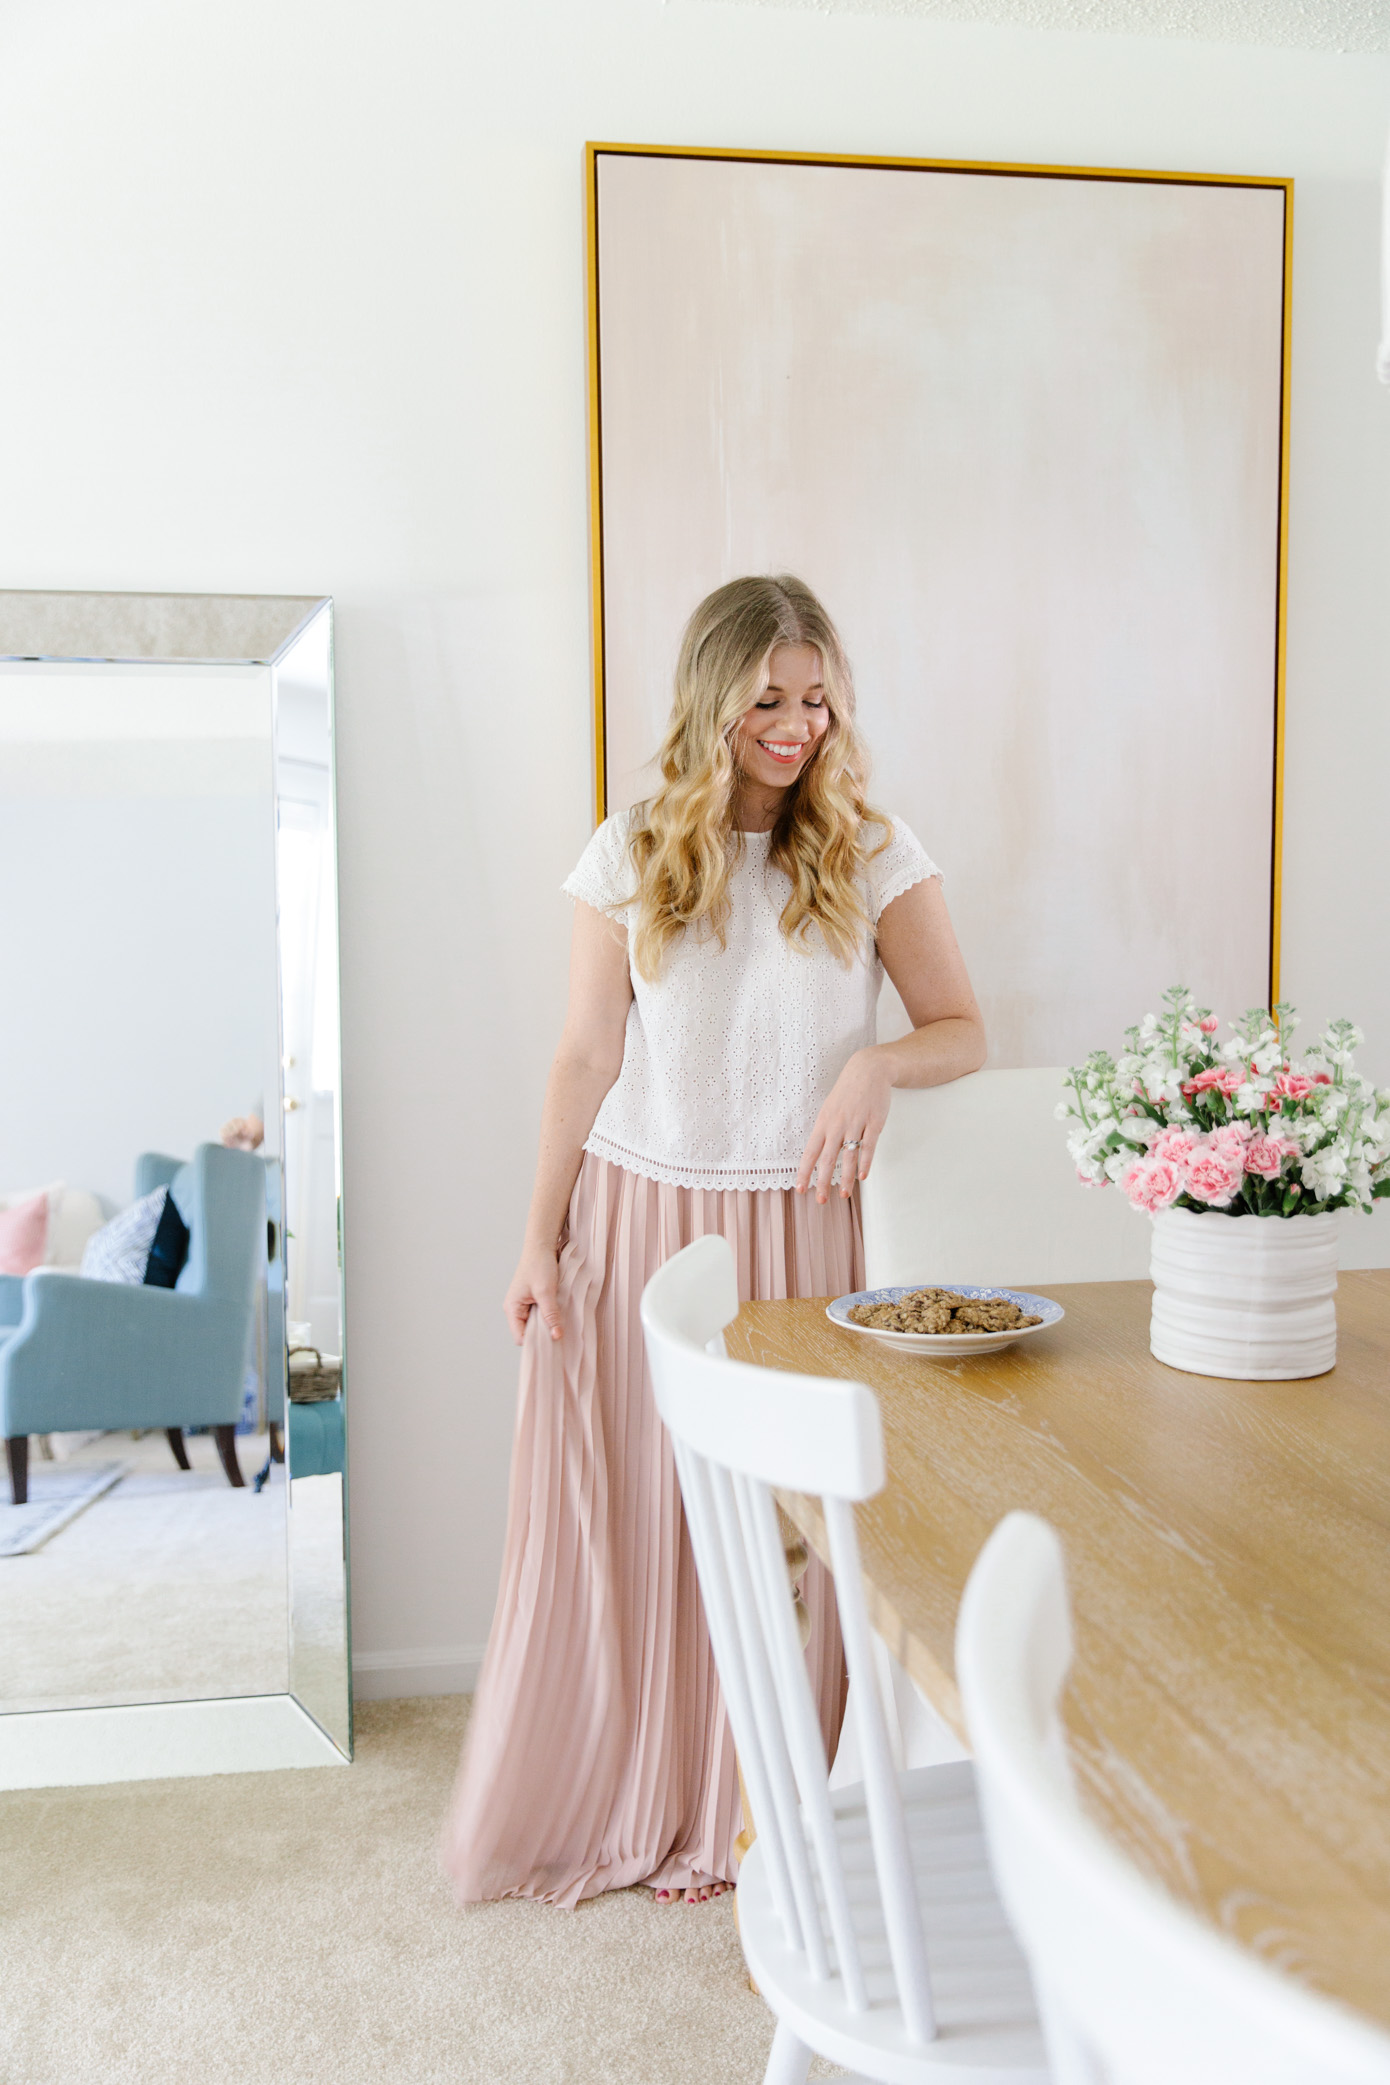 Glitter Guide x Louella Reese Home Reveal | Casual Feminine Decor | Louella Reese Life & Style Blog 